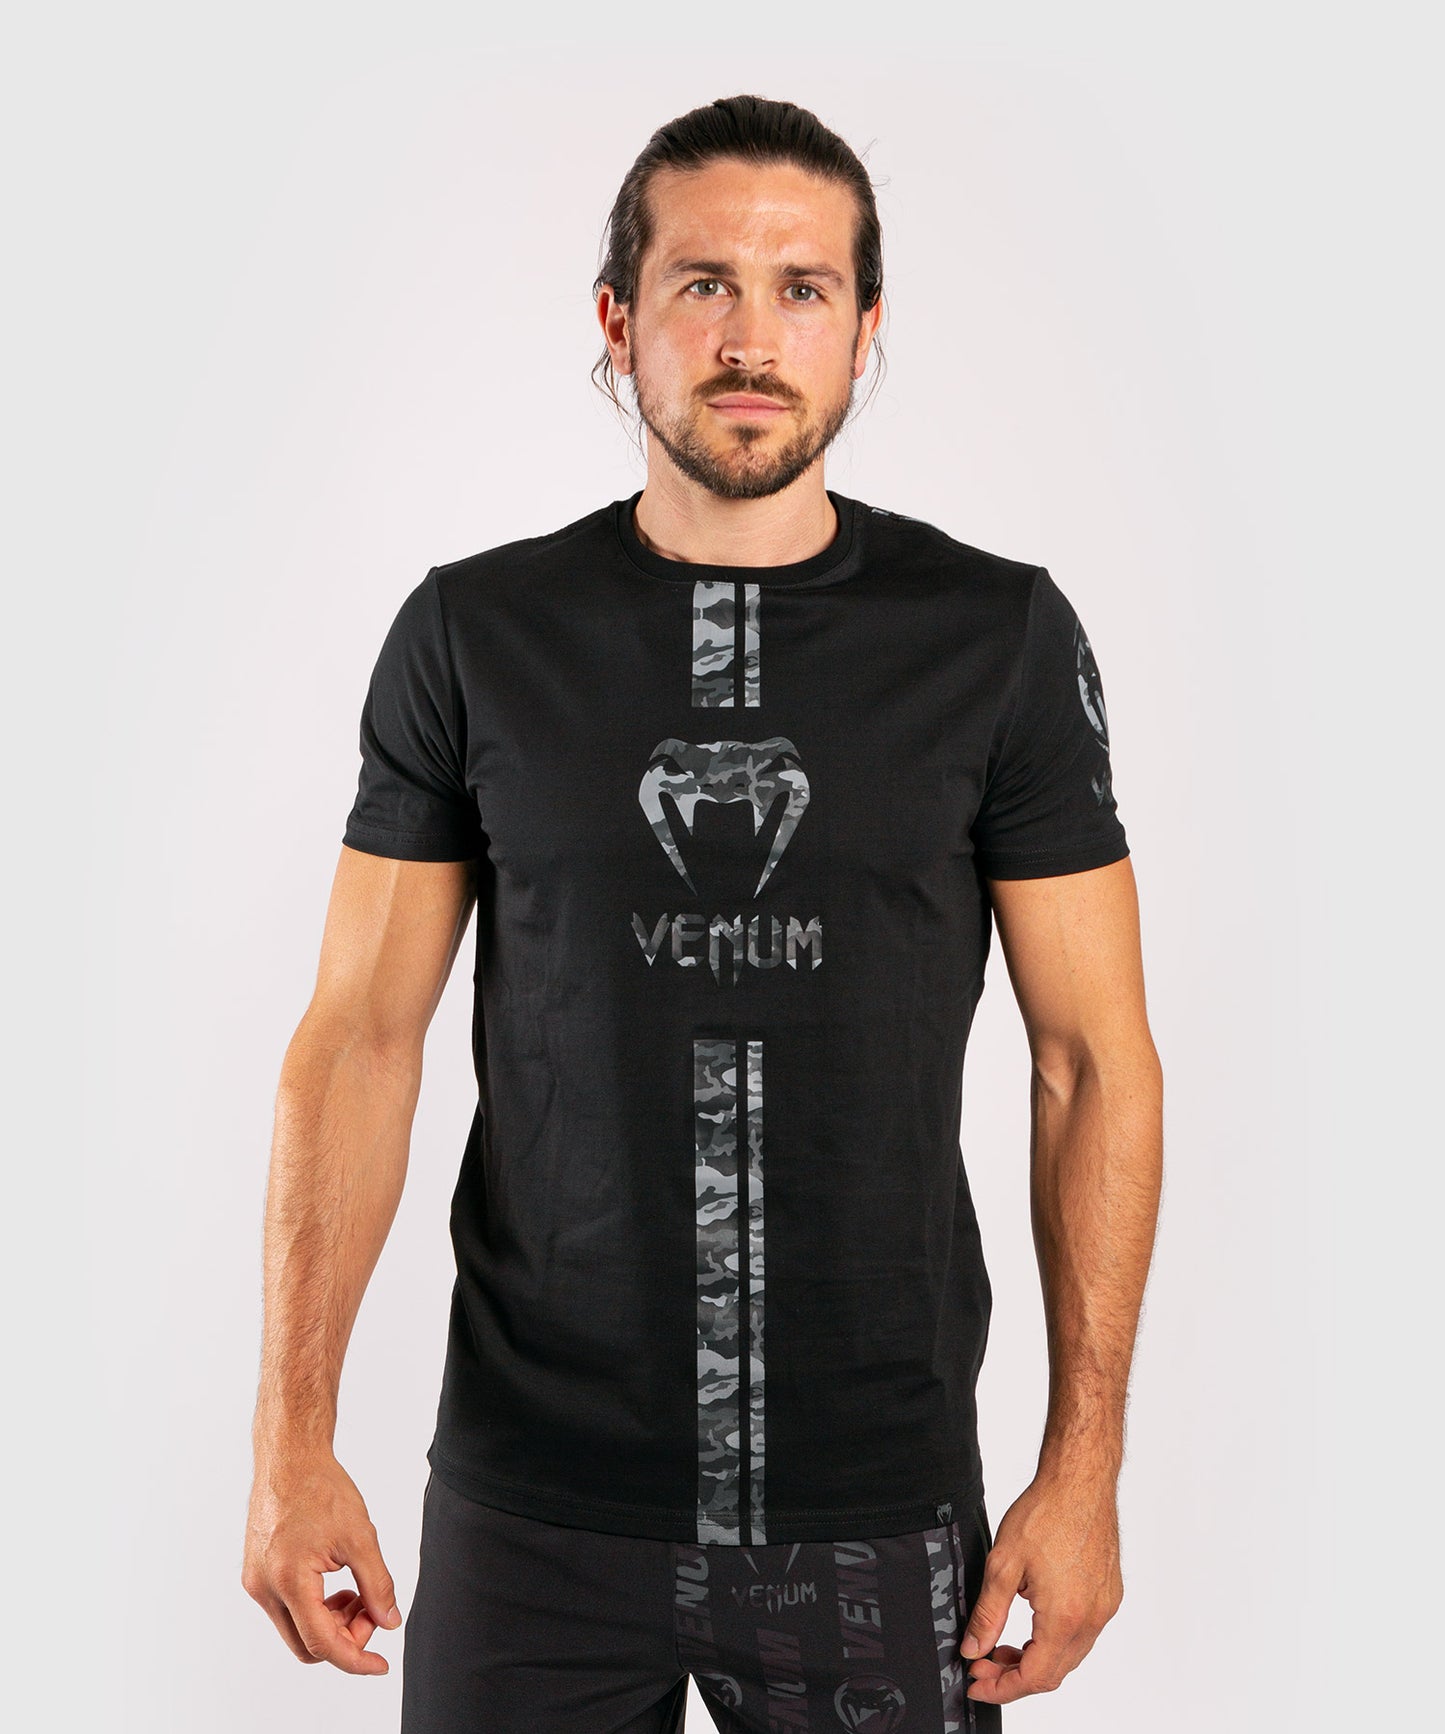 Venum Logos T-Shirt - Black/Urban camo